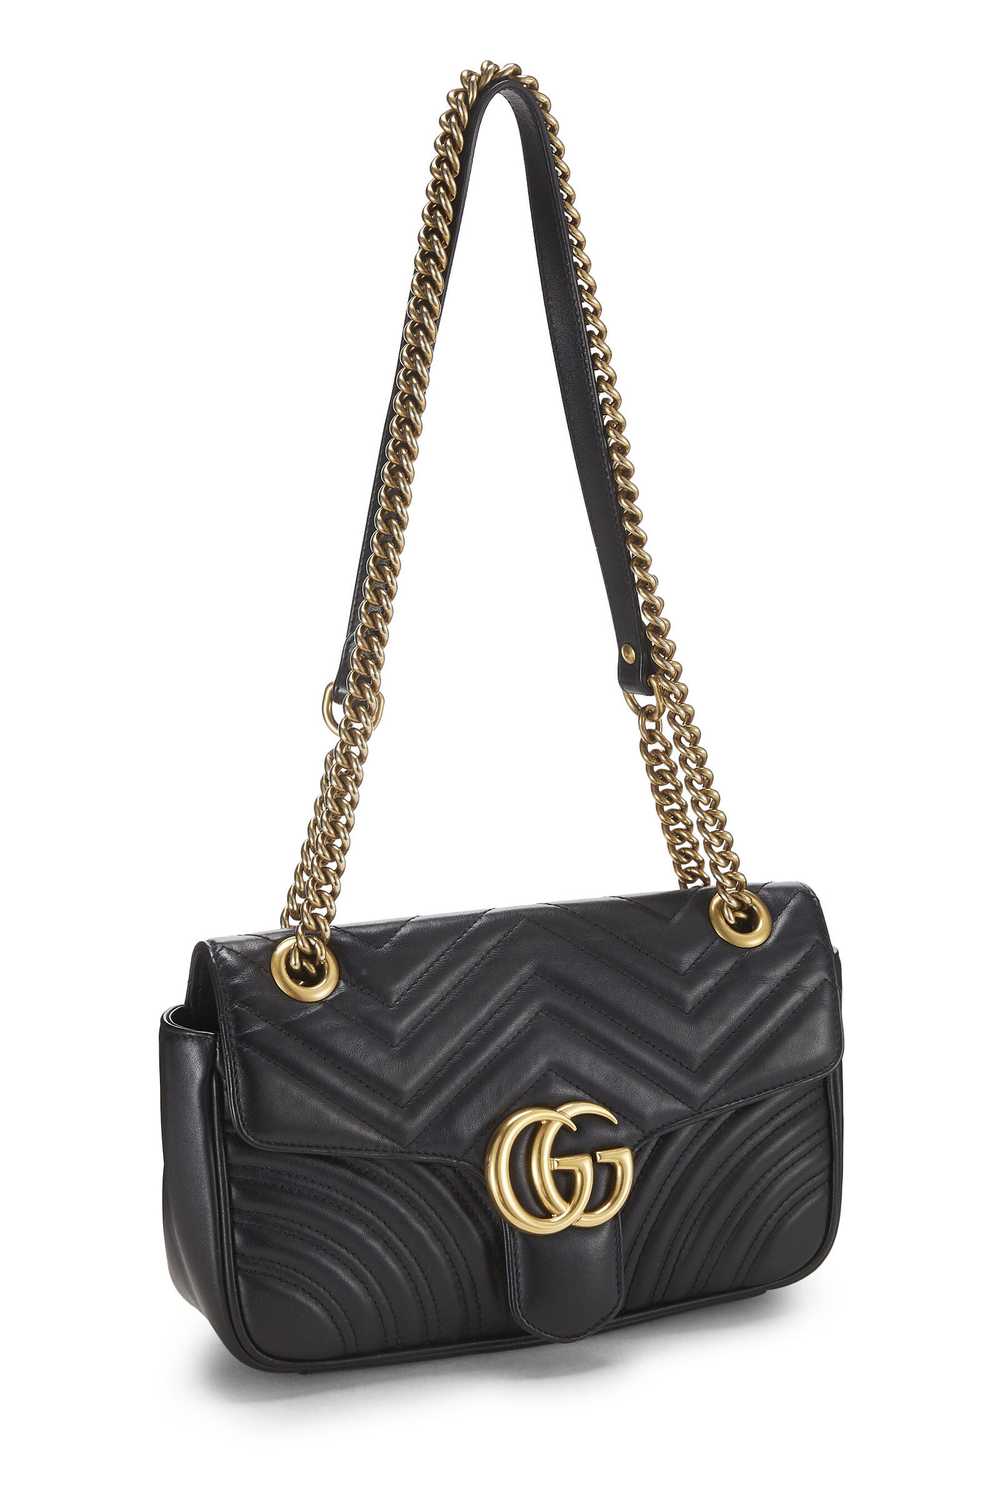 Black Leather GG Marmont Shoulder Bag Small - image 2